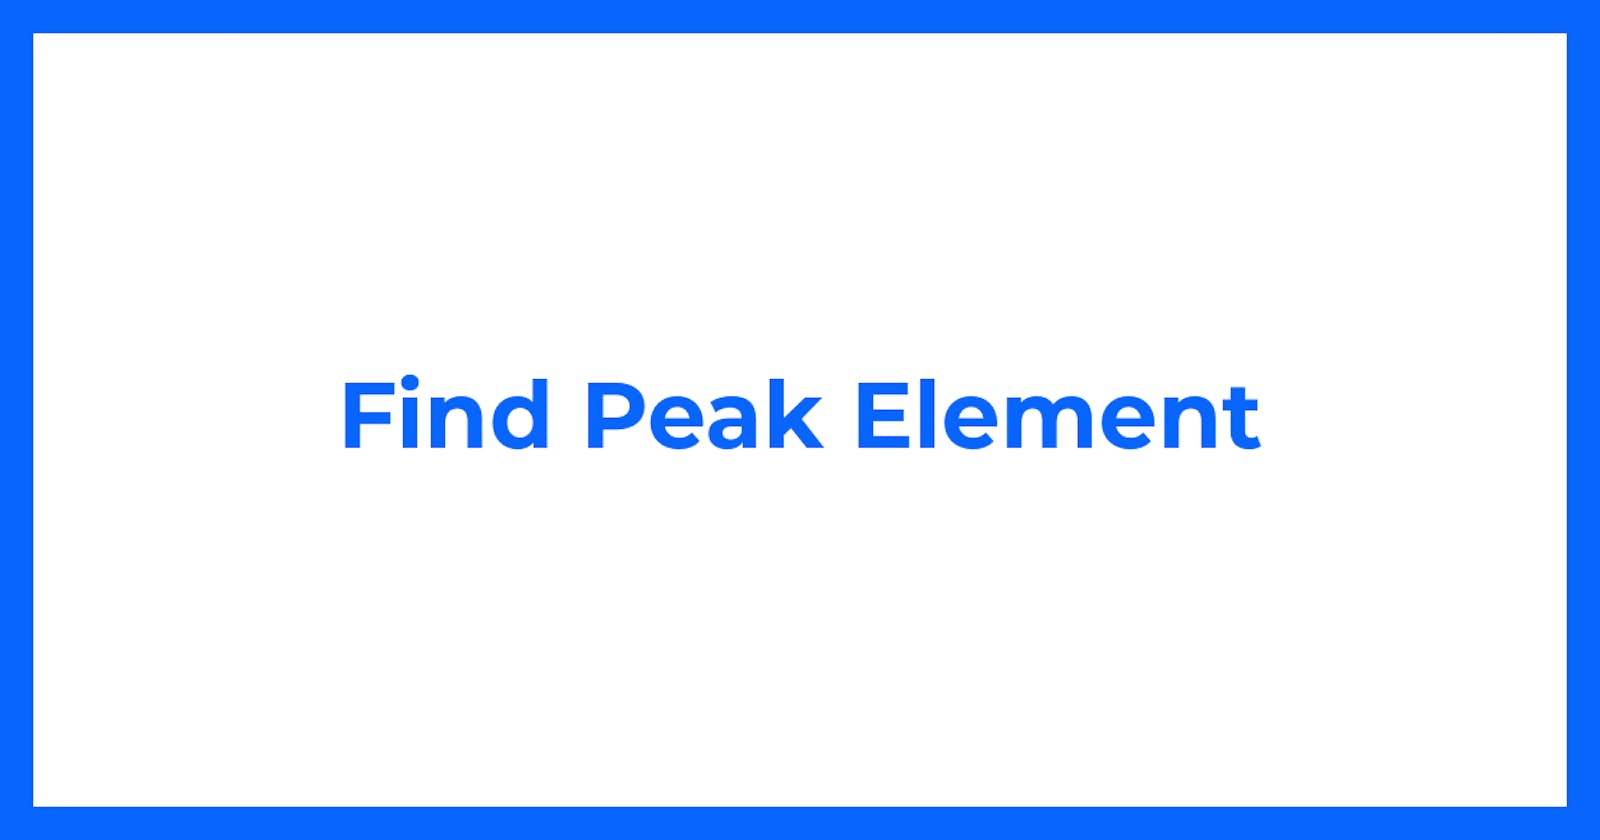 Find Peak Element